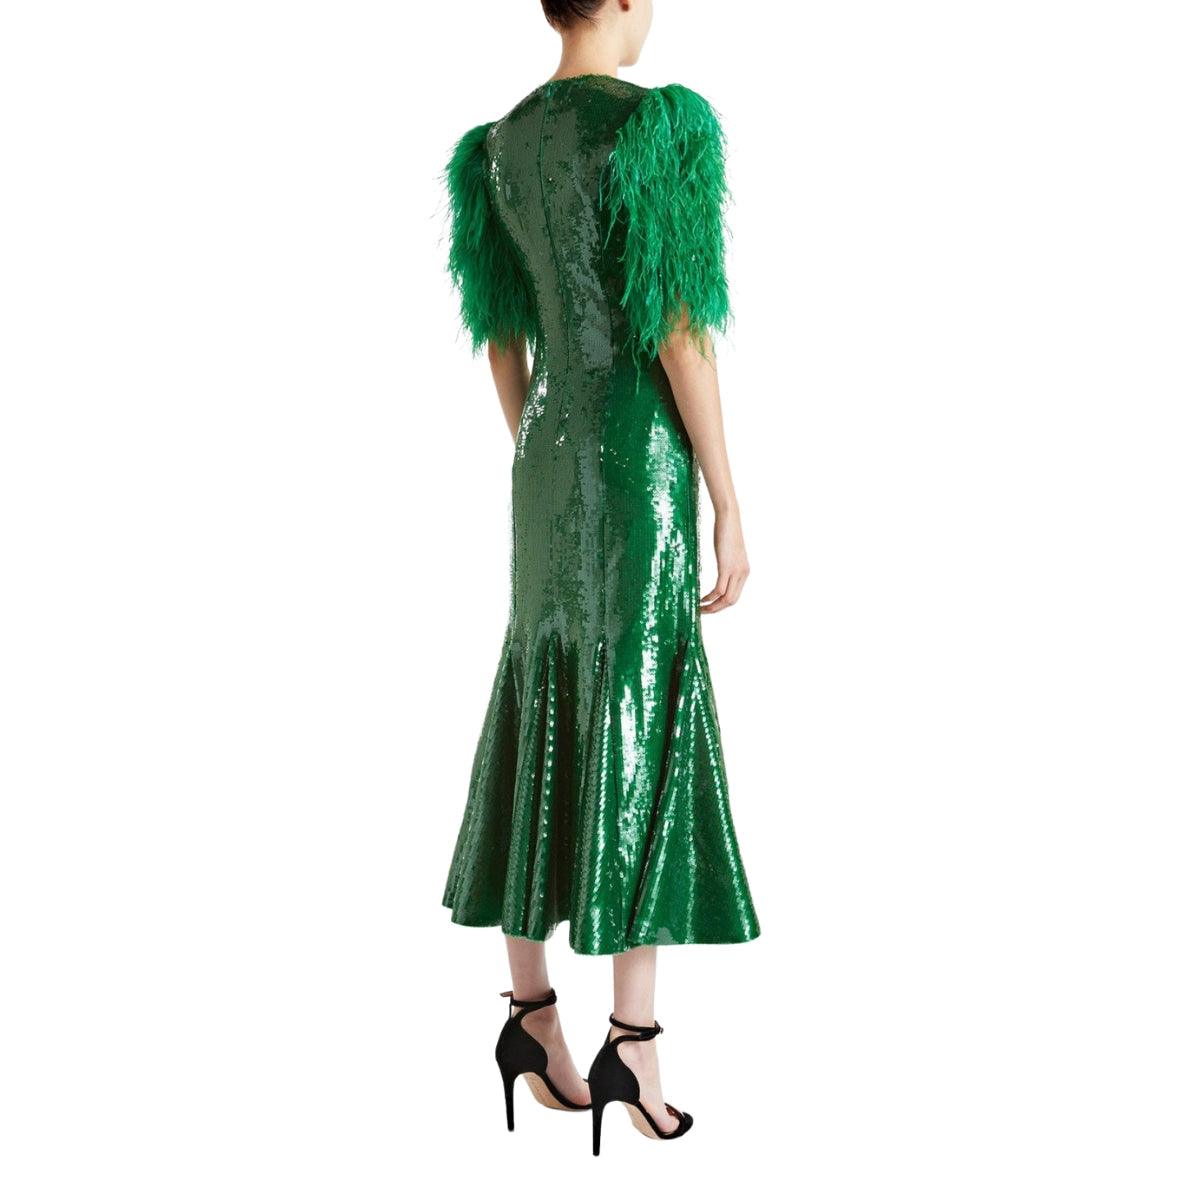  Huishan ZhangEmerald Sequins Dress - Runway Catalog